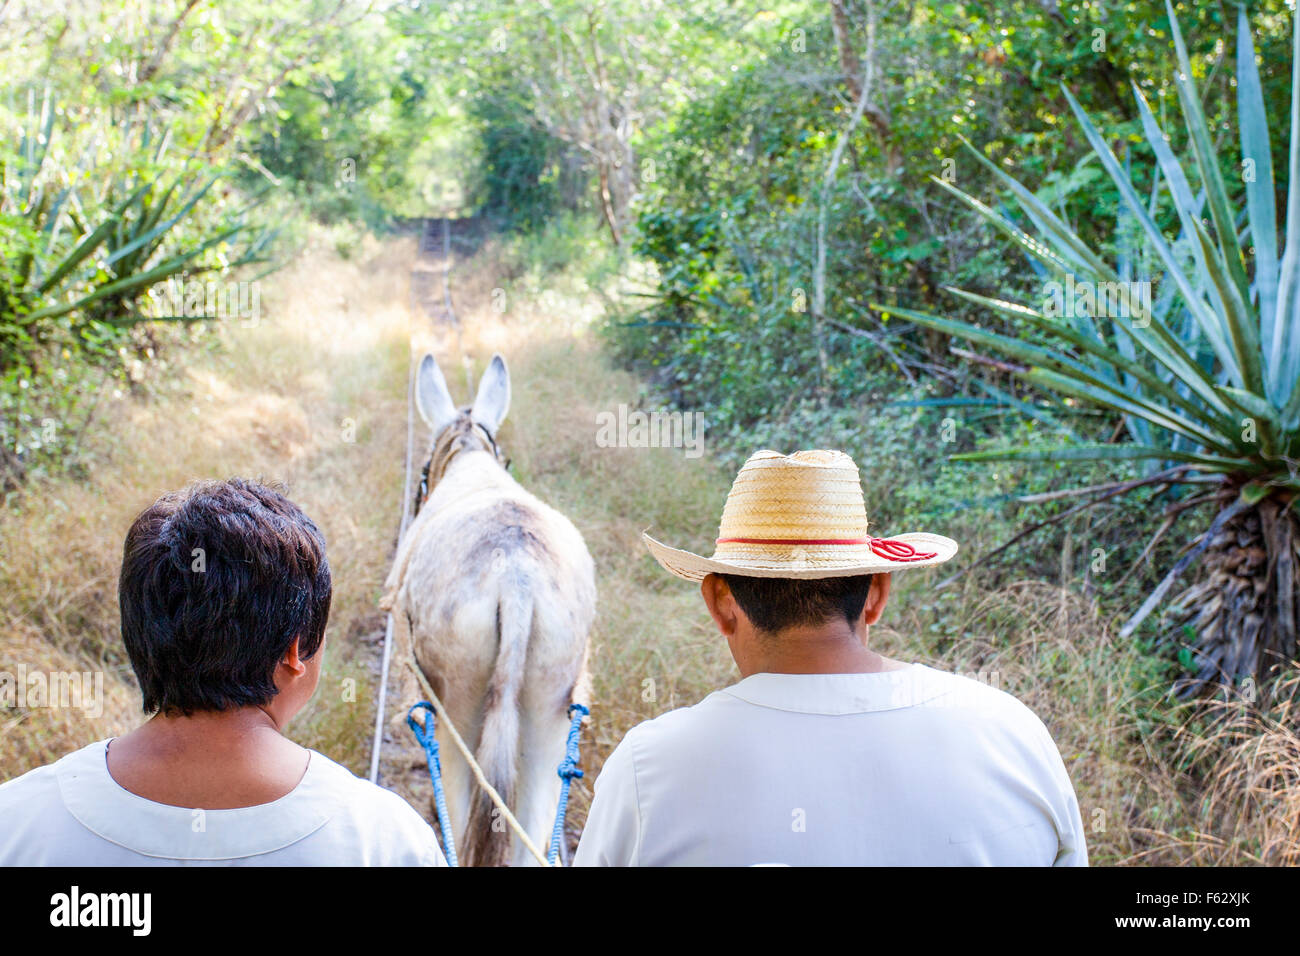 Ride to the cenote the old fashioned way at the Temozon Hacienda in Yucatan, Mexico. Stock Photo